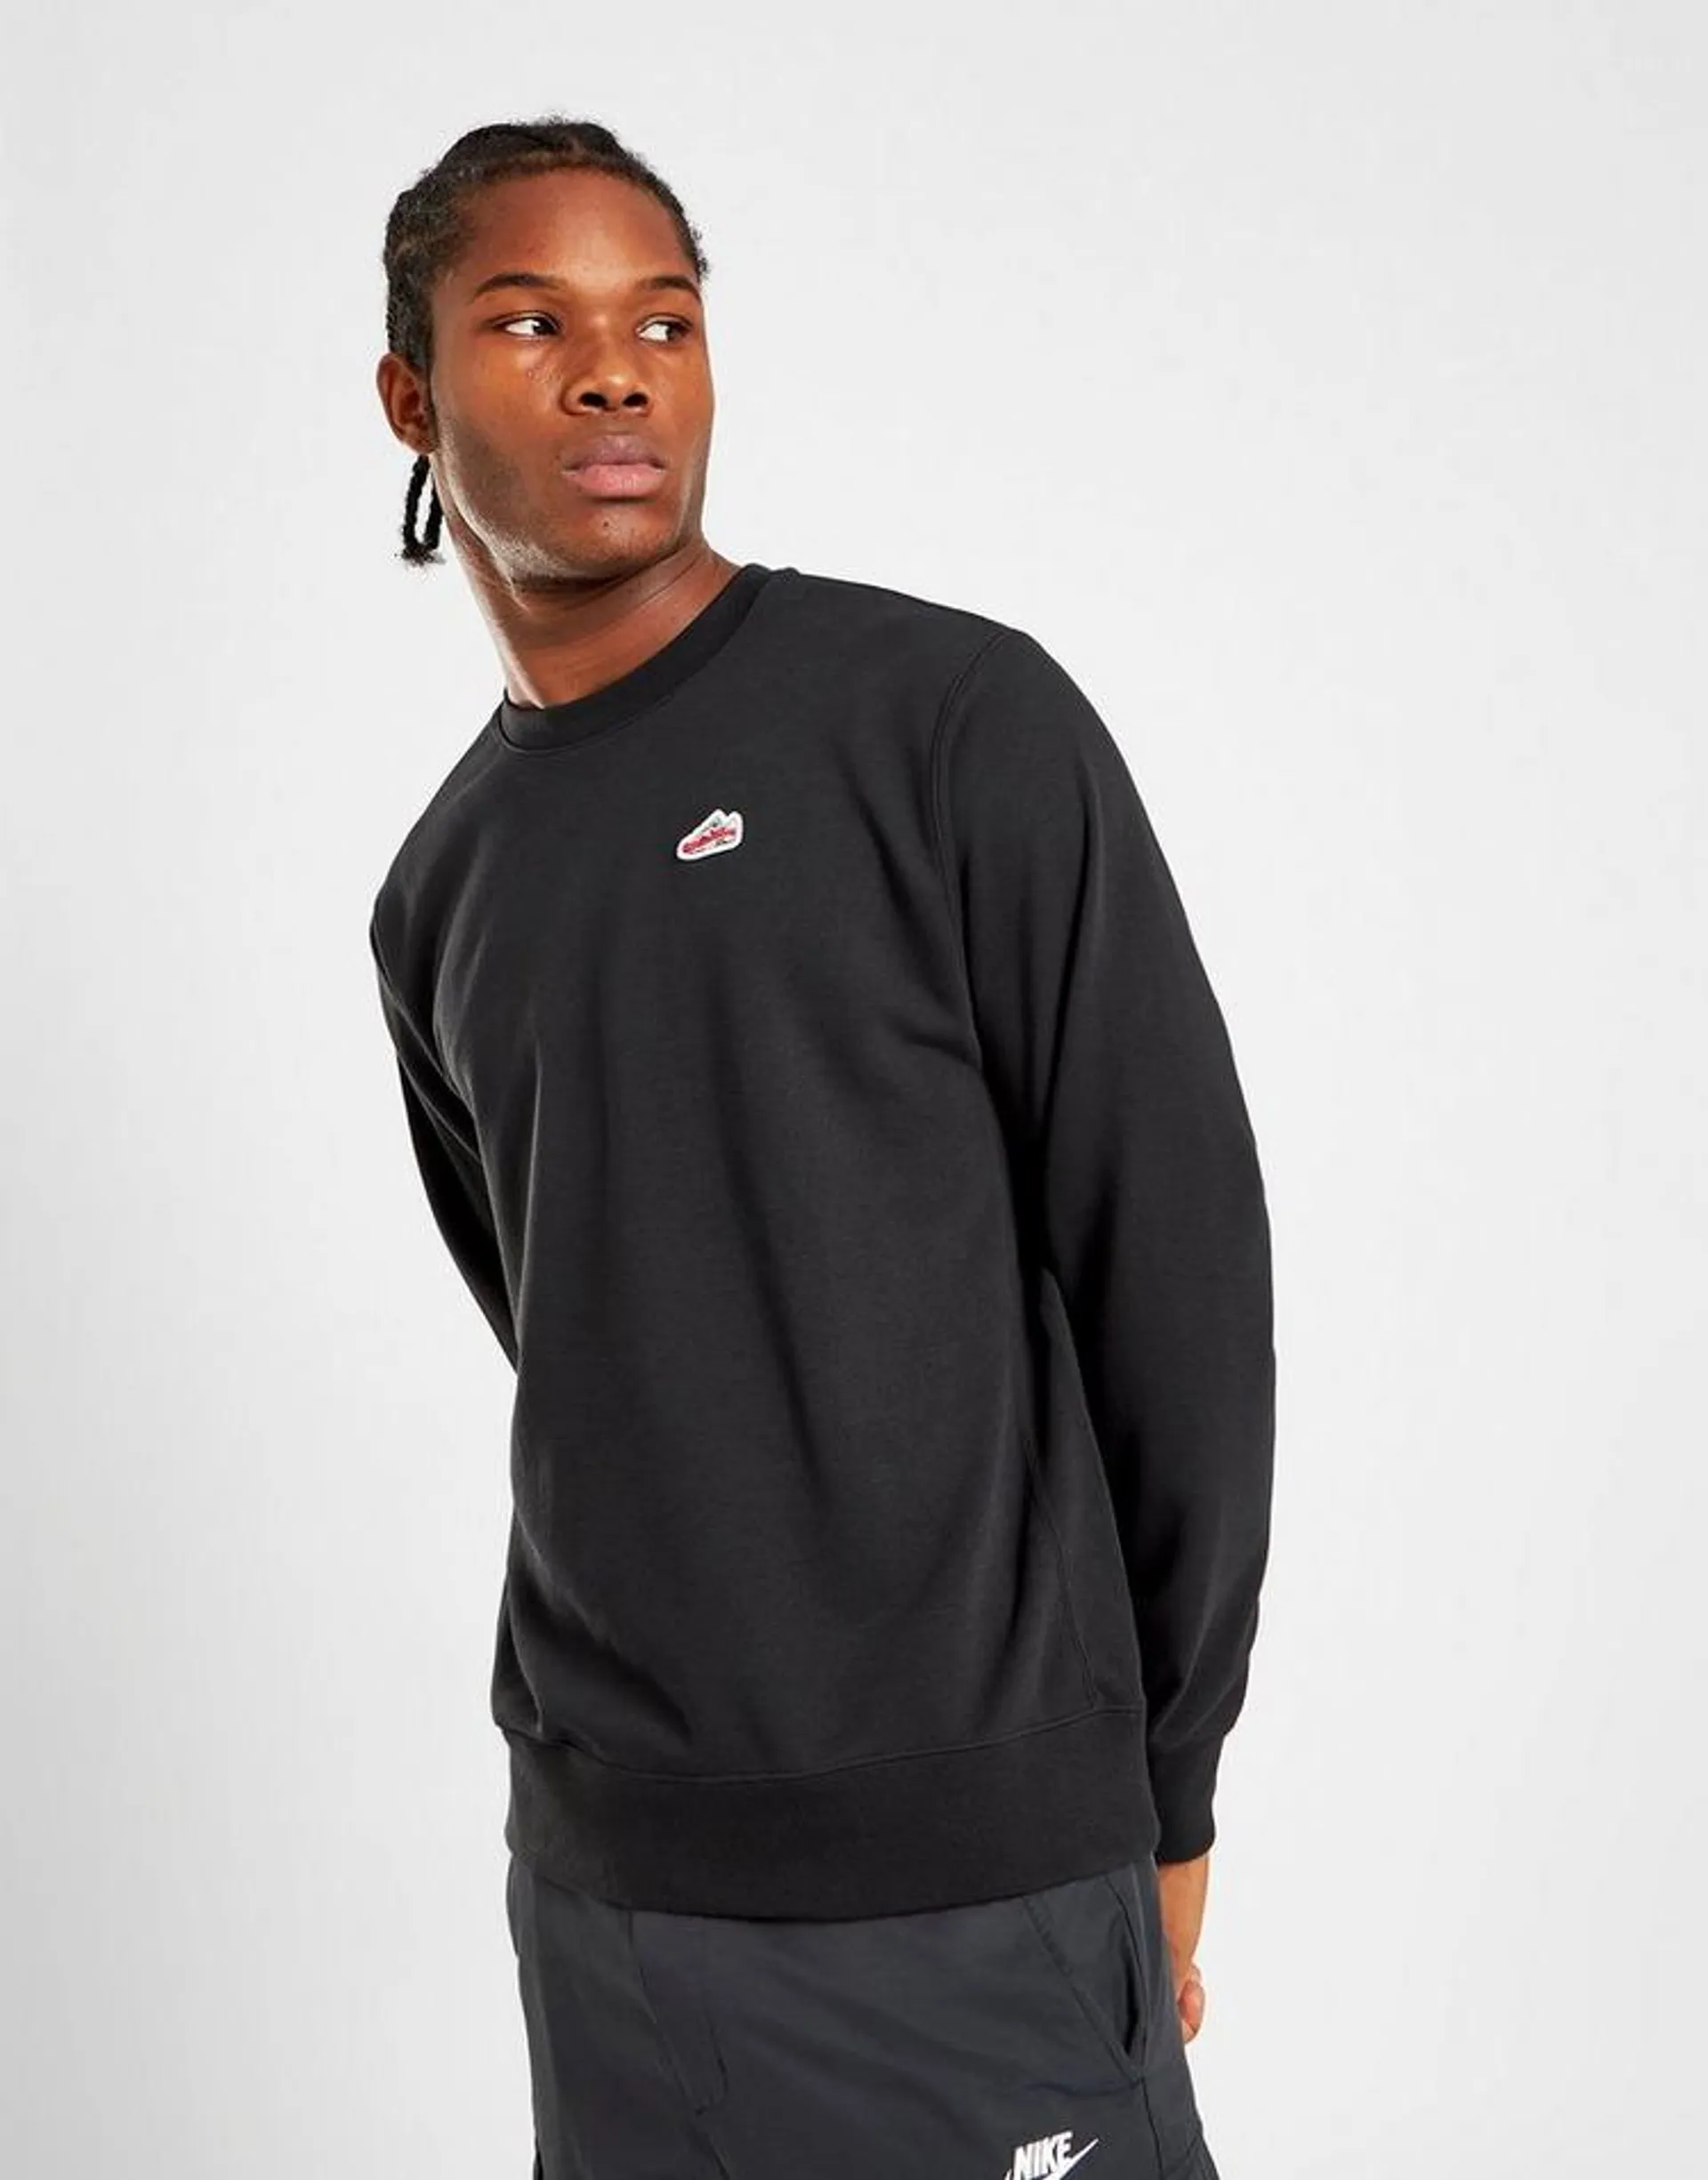 Nike AM1 Sweatshirt